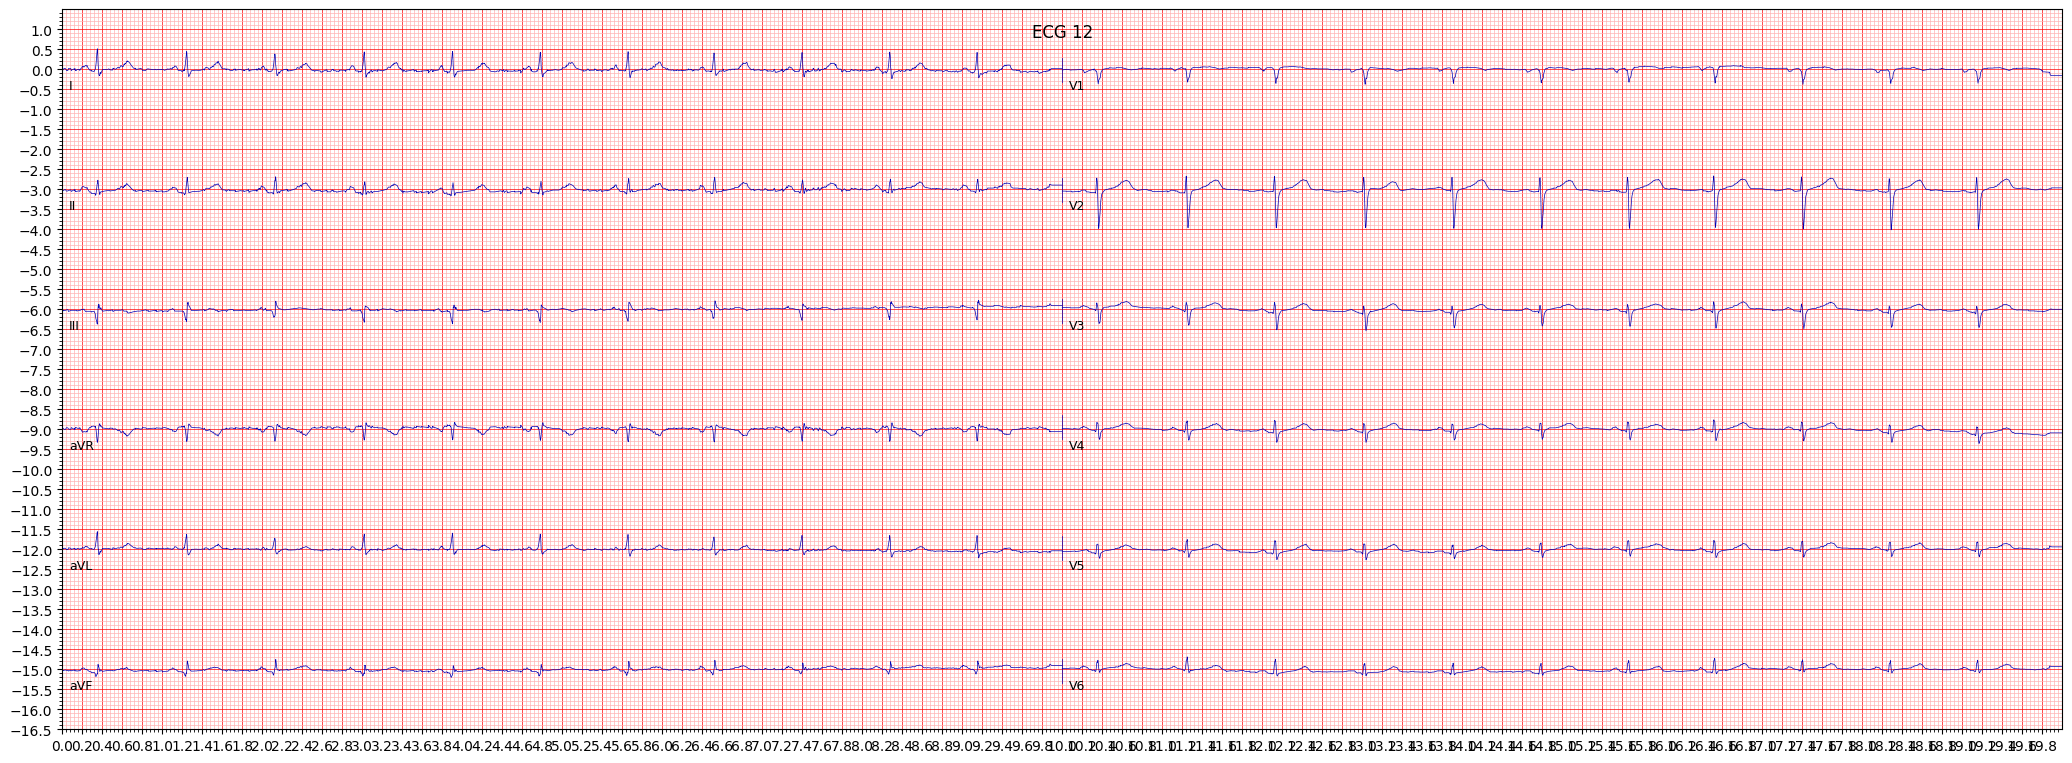 inferolateral myocardial infarction (ILMI) example 3376